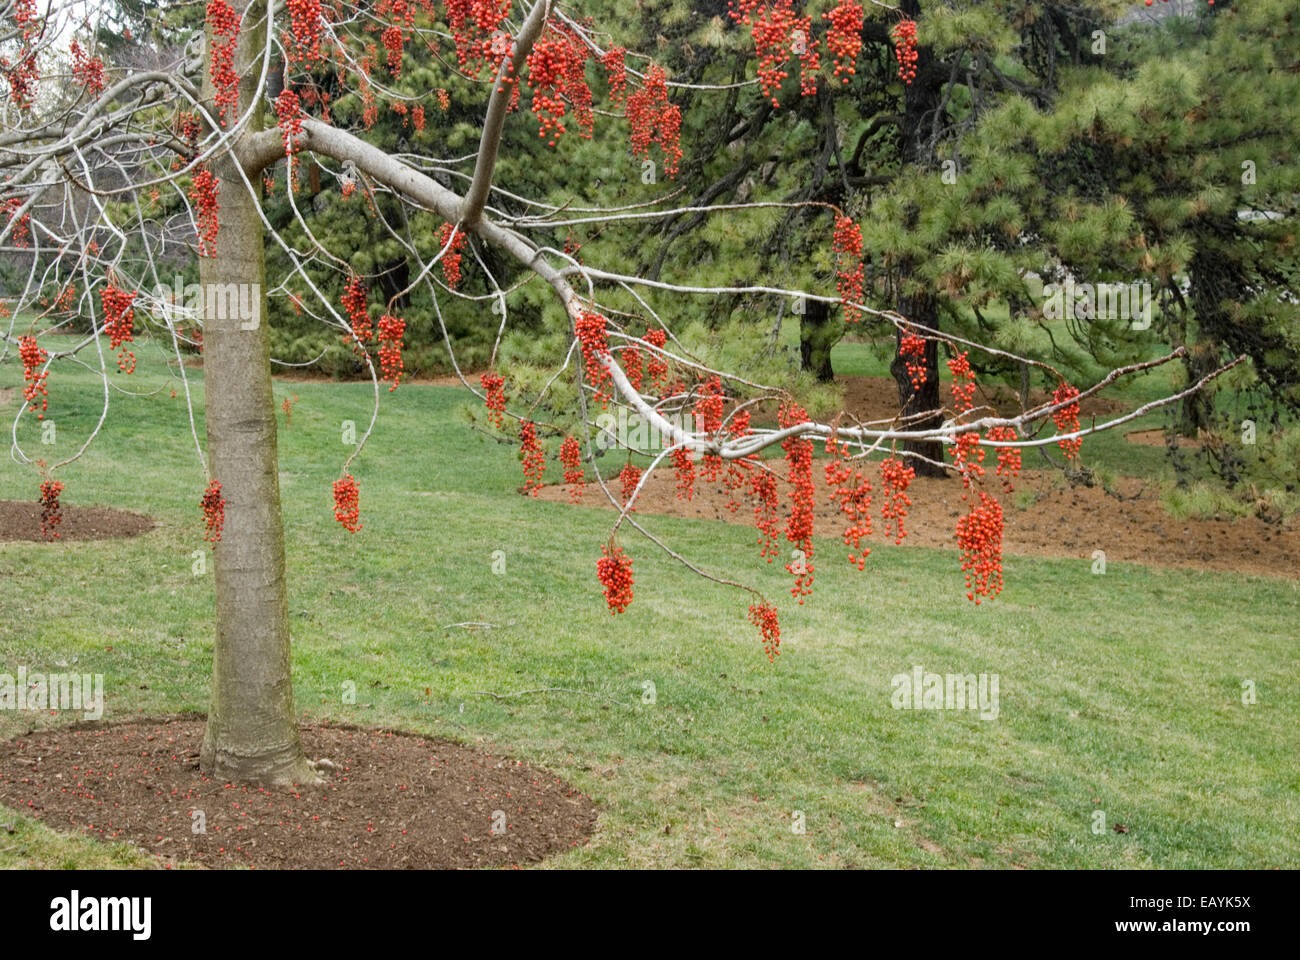 IIGIRI TREE WITH RED BERRIES - IDESIA POLYCARPA Stock Photo